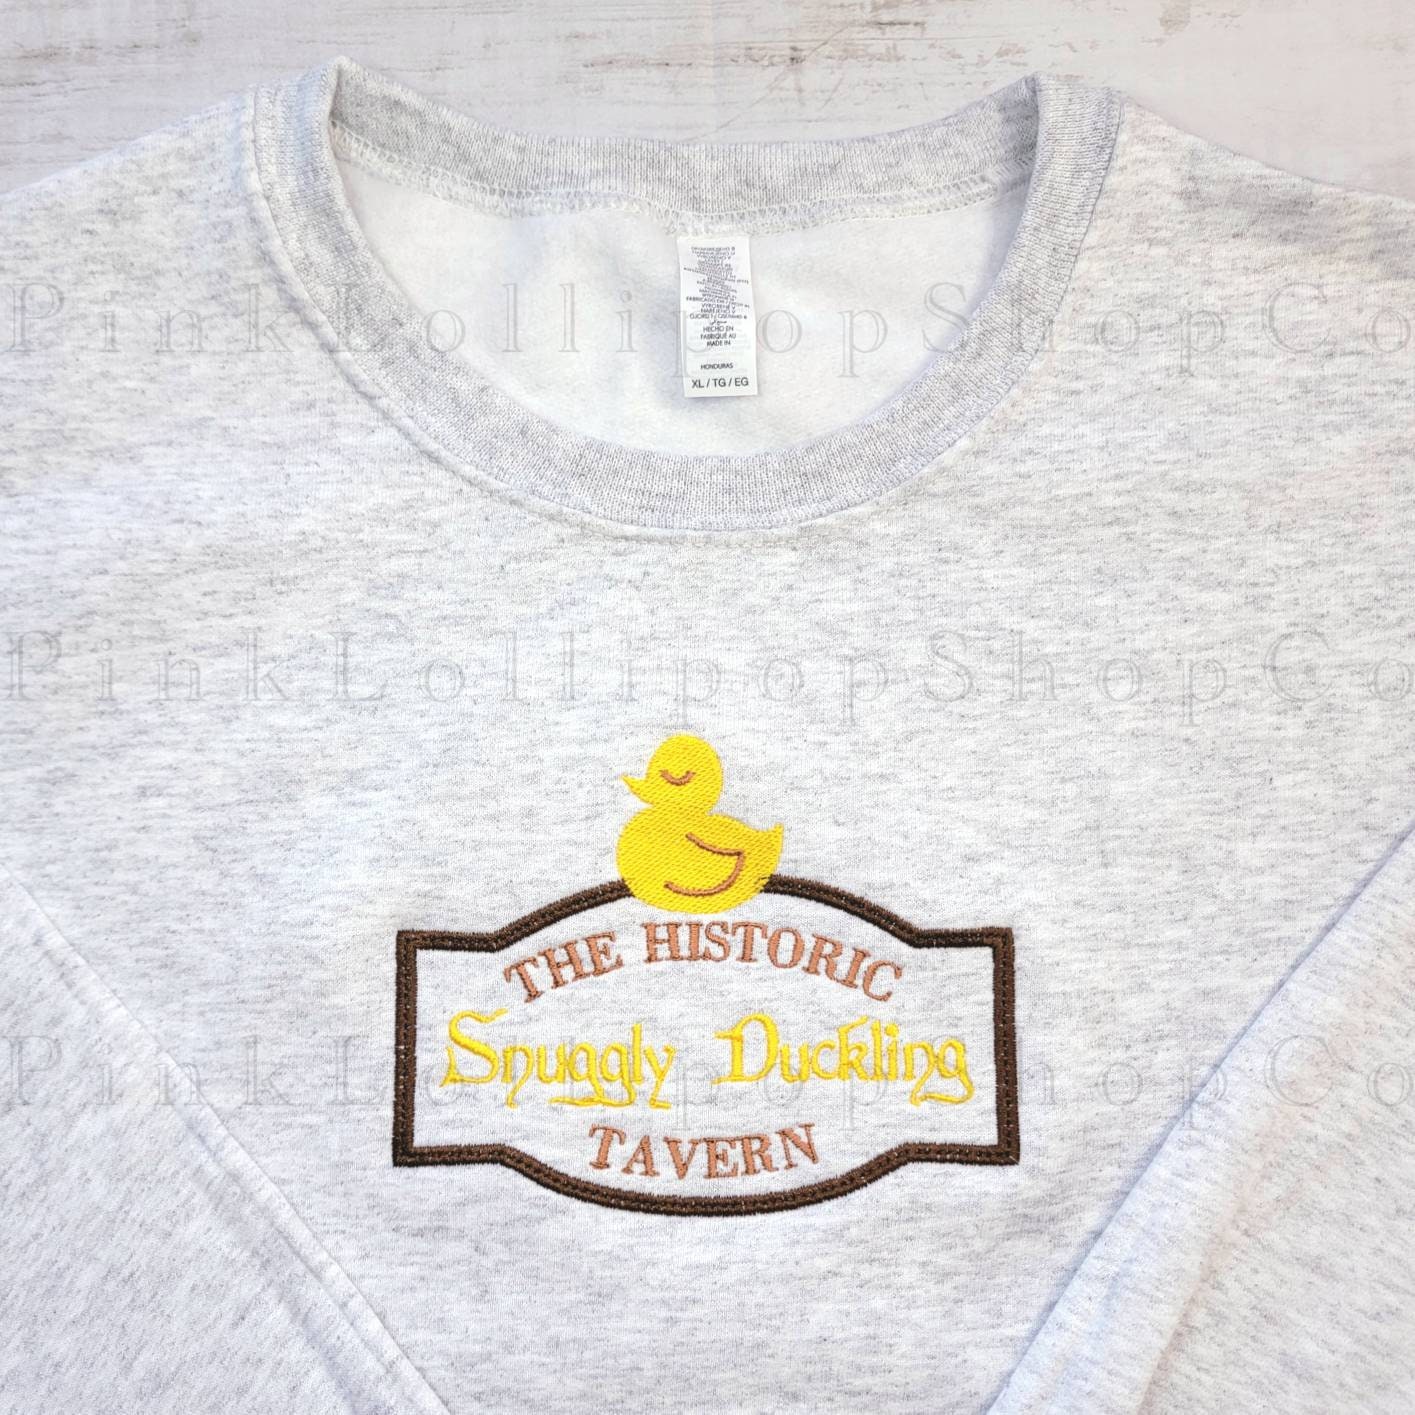 Snuggly Duckling Sweatshirt, Rapunzel Embroidered Crewneck